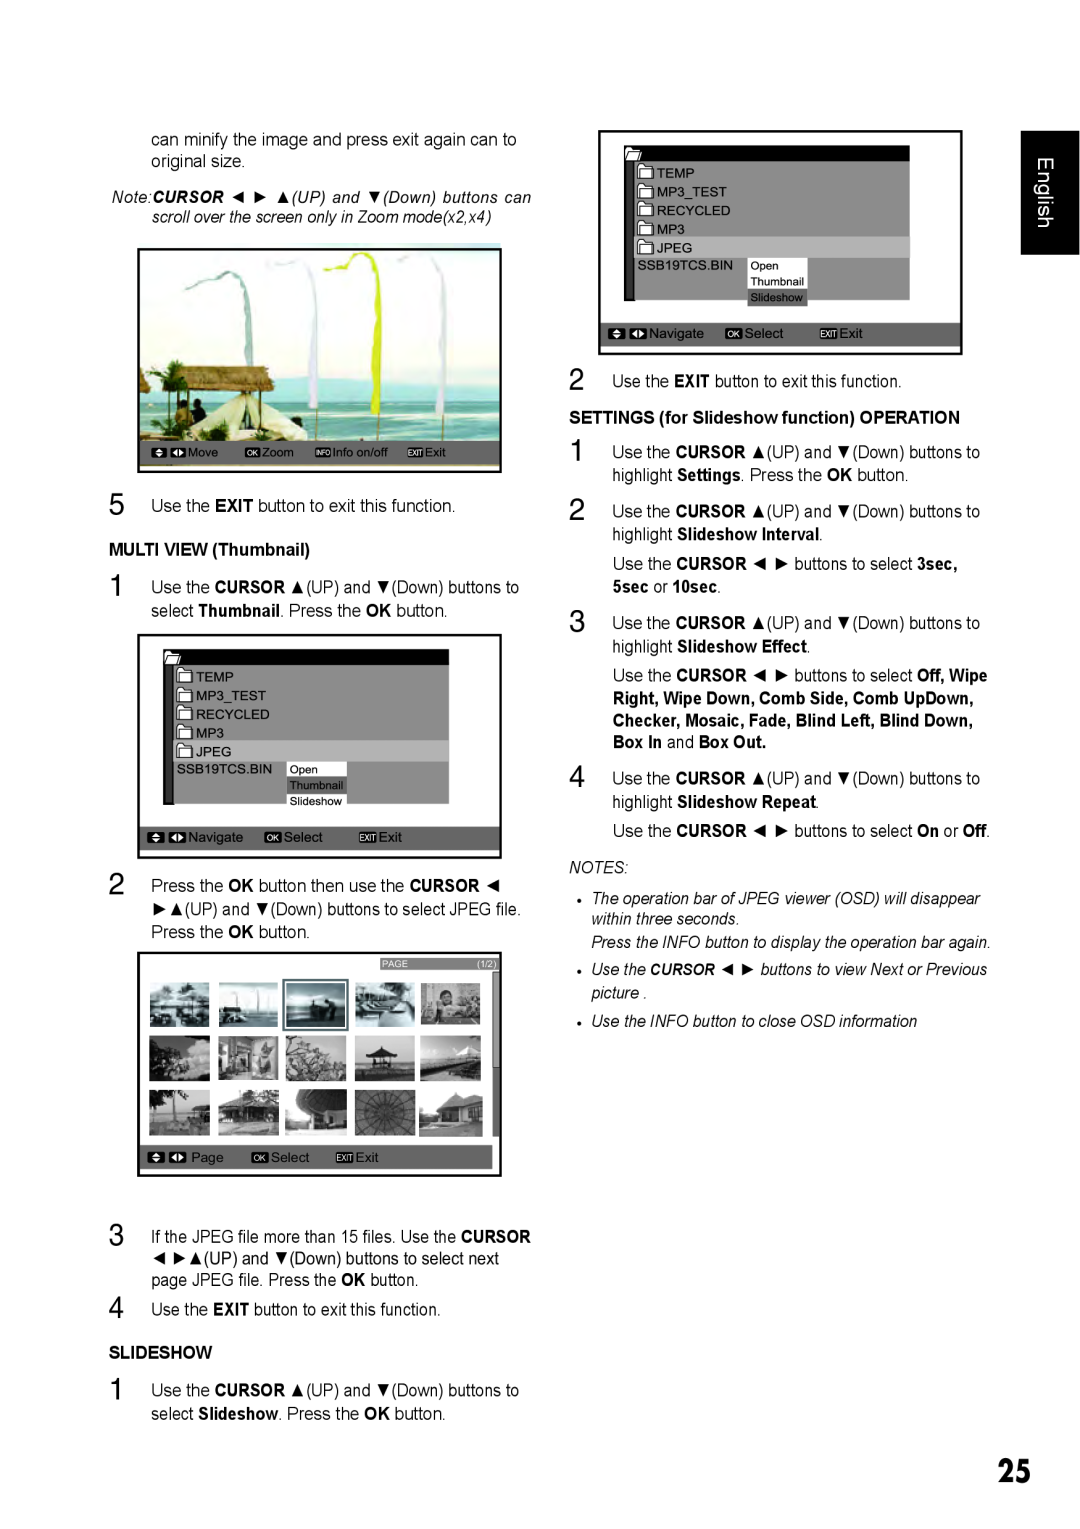 Sanyo DP42410 manual English, MULTI VIEW Thumbnail, ŻŹŸ83, SETTINGS for Slideshow function OPERATION 